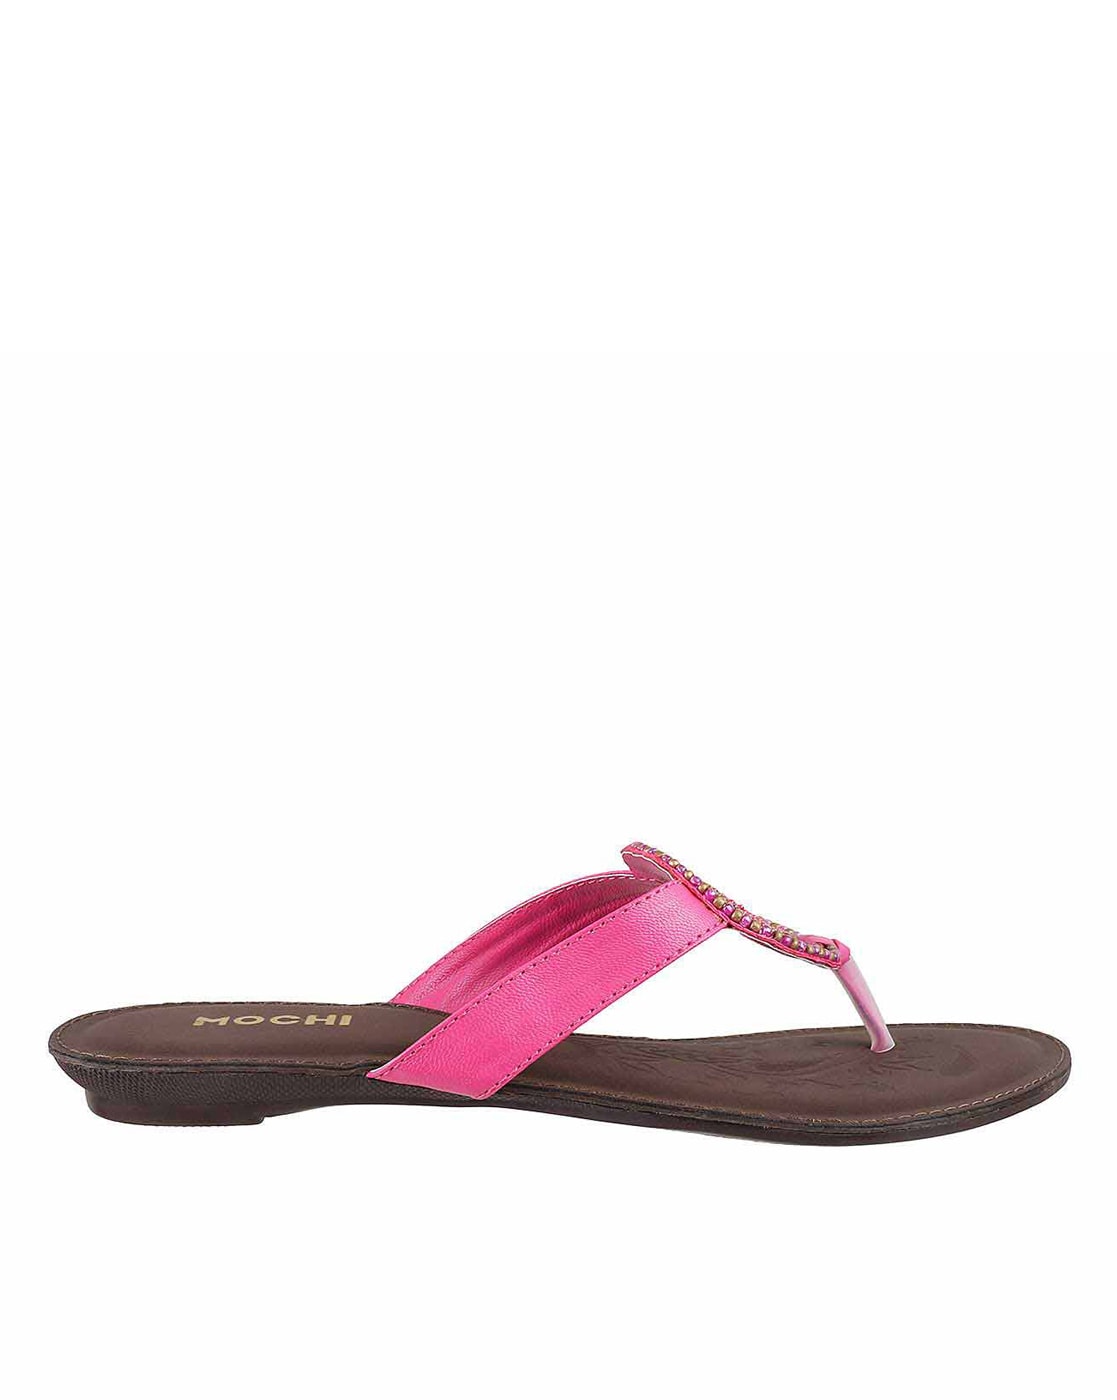 Buy Pink Flat Sandals for Women by Mochi Online